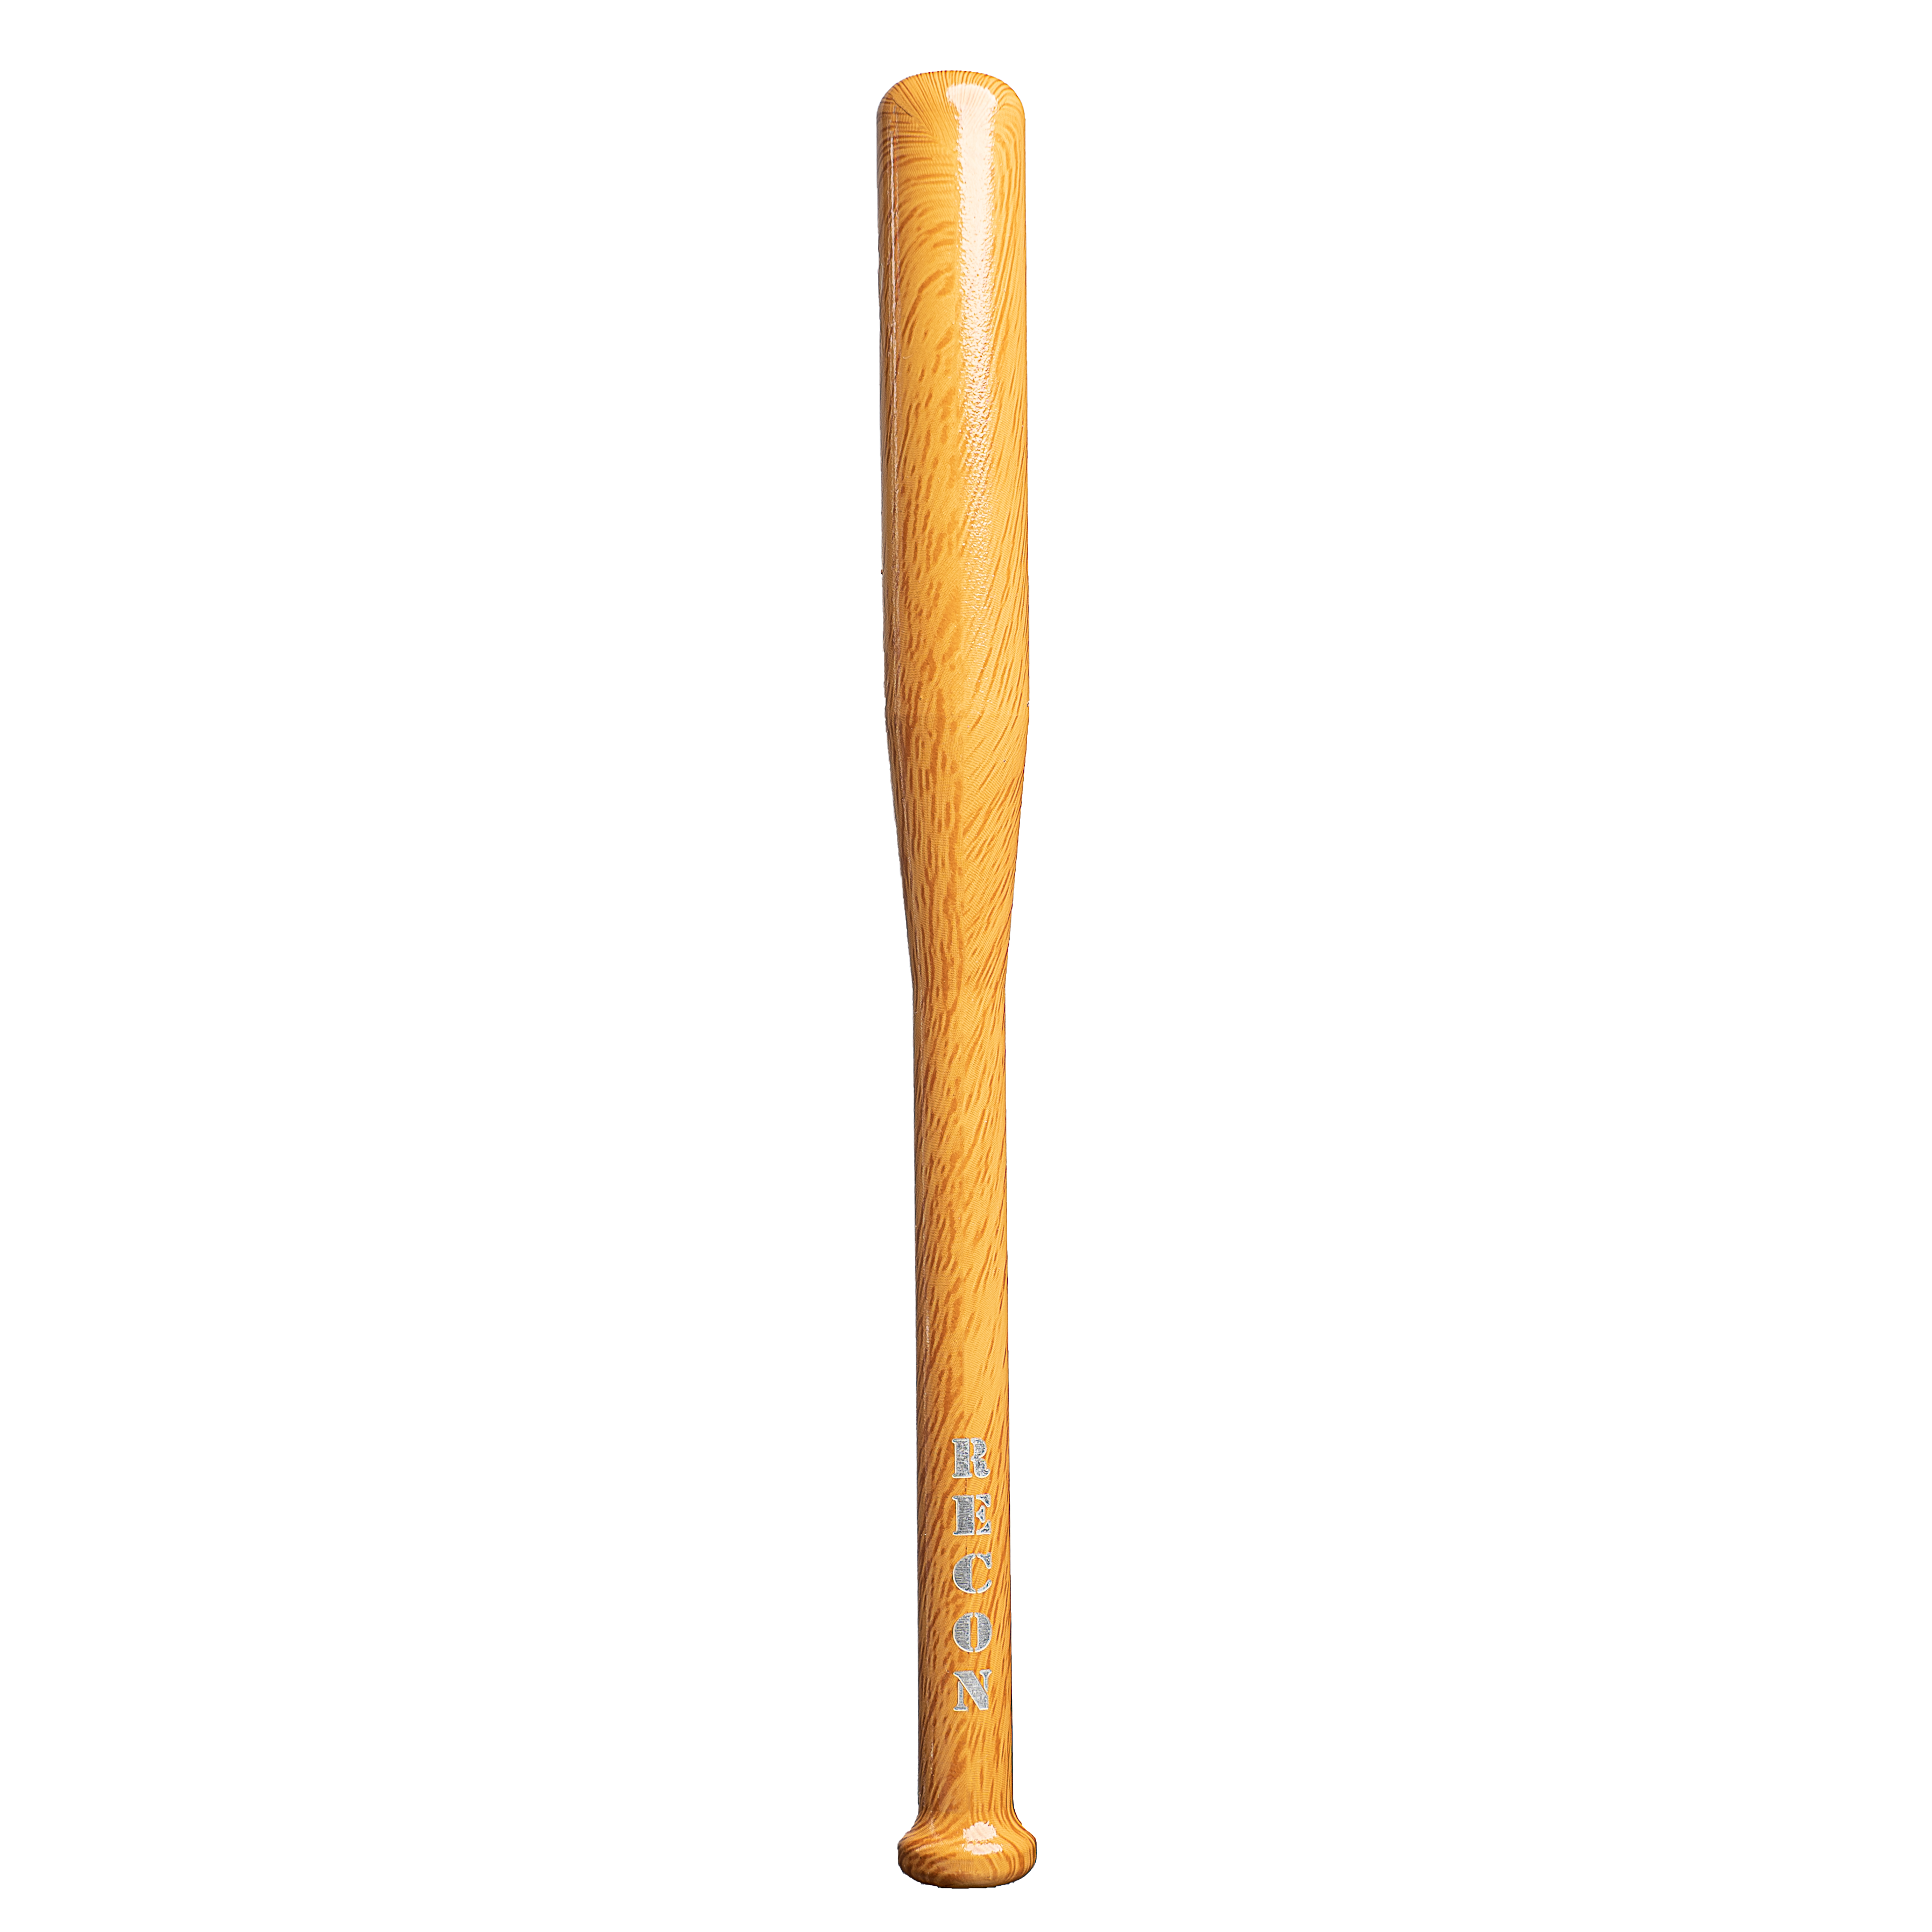 Picture Of A Baseball Bat - KibrisPDR